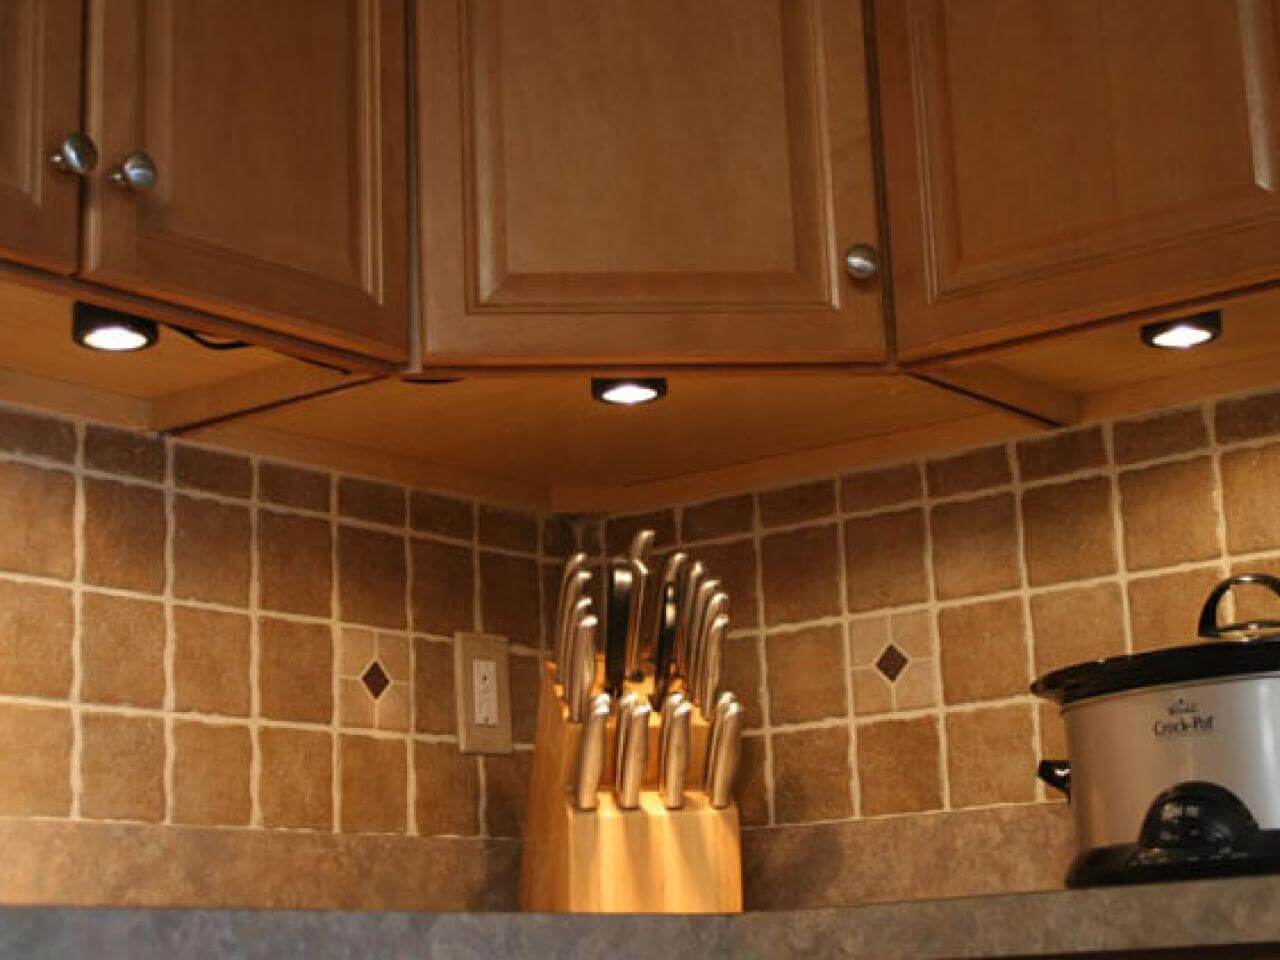 CCTV-like kitchen under cabinet lighting